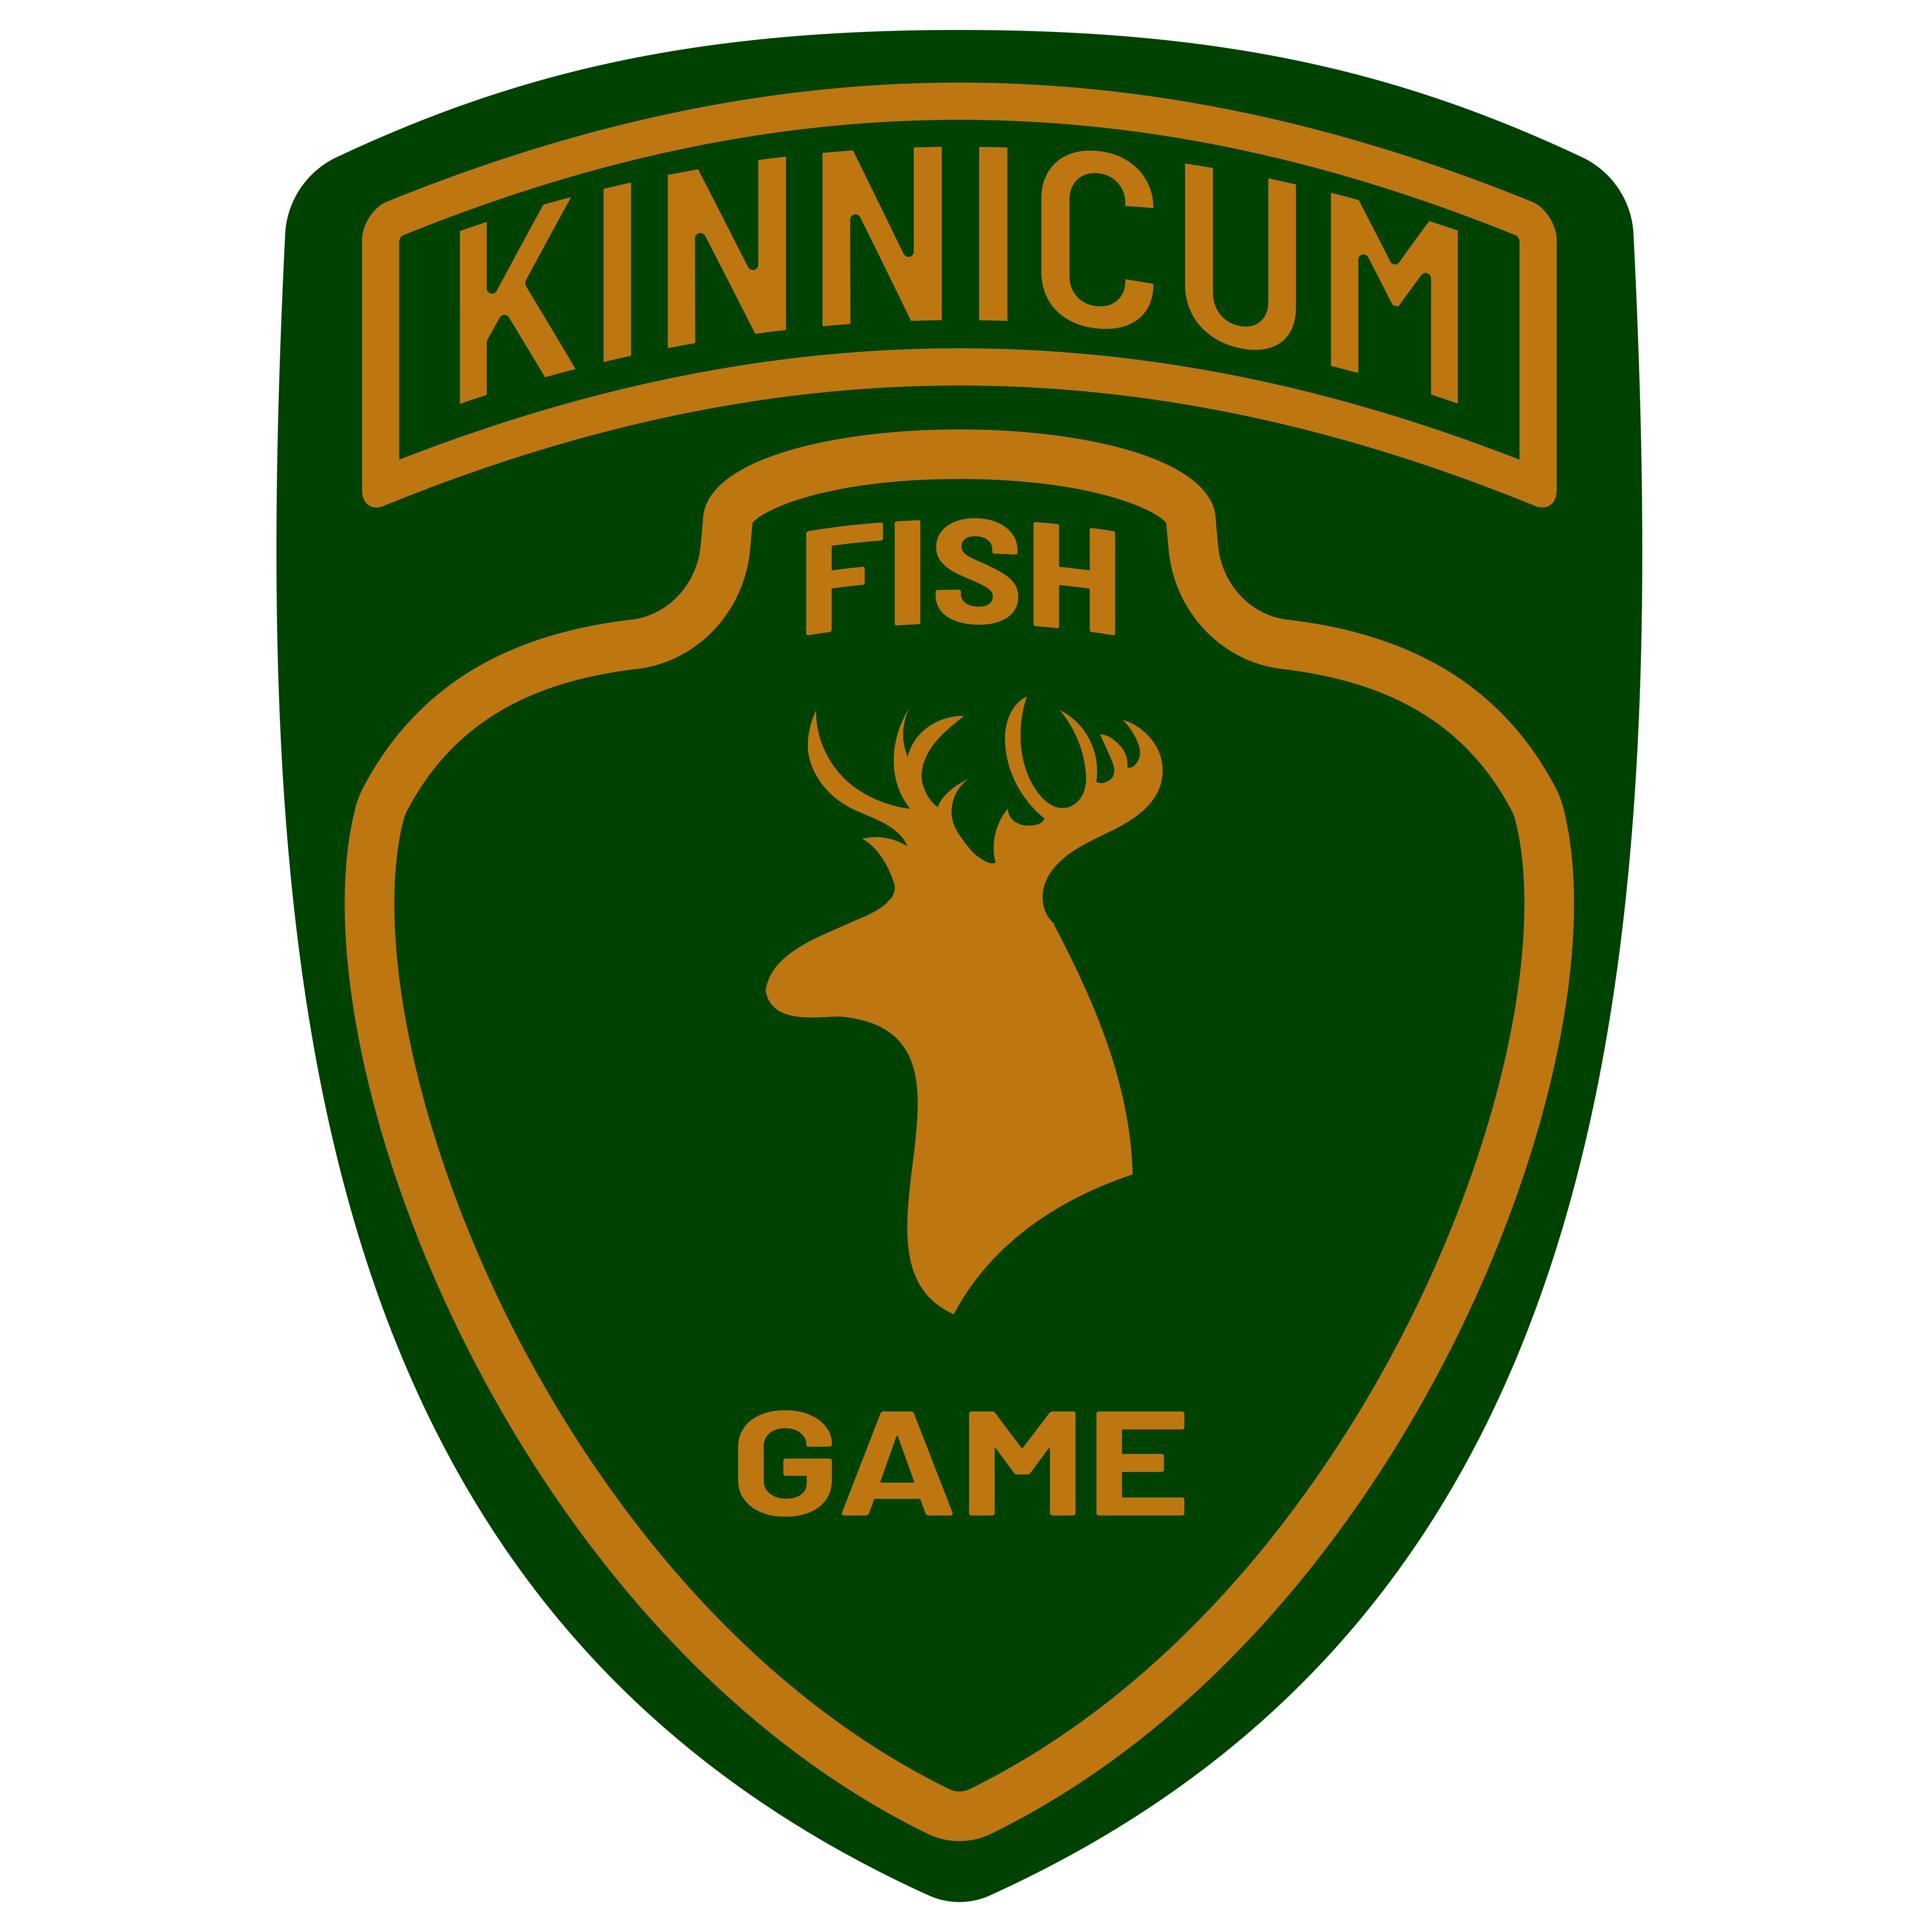 Kinnicum Fish and Game